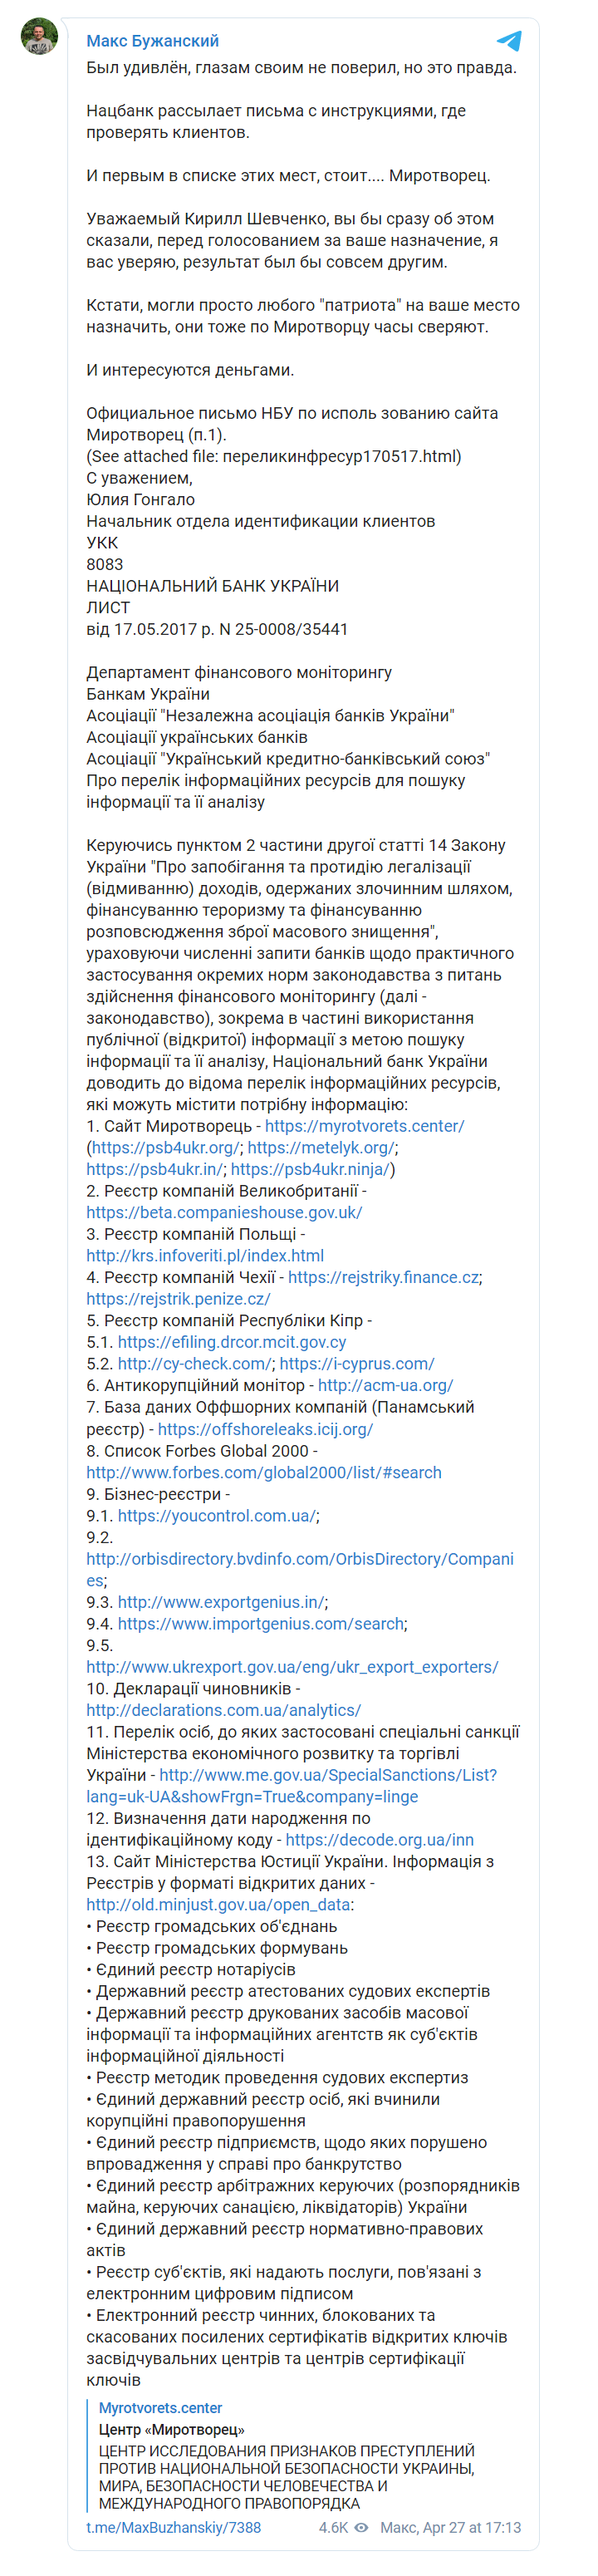 Скриншот 1 из Телеграм Максима Бужанского